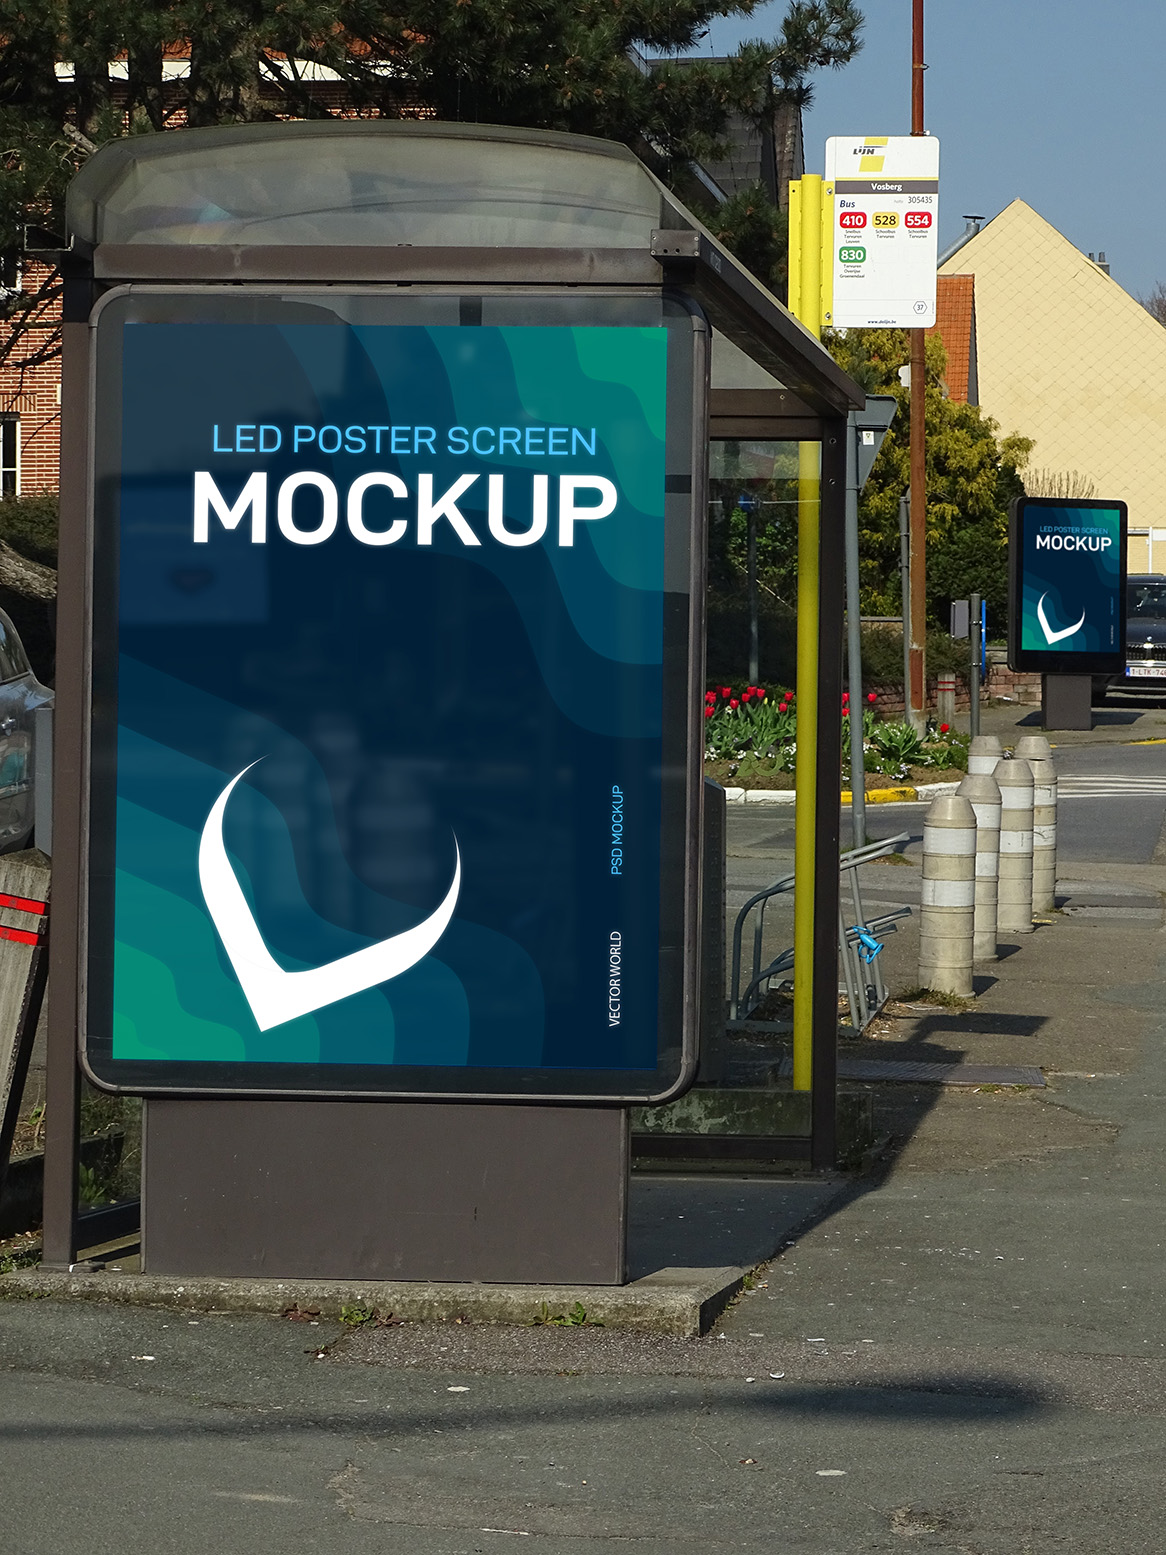 bus stop led poster screen mockup 455